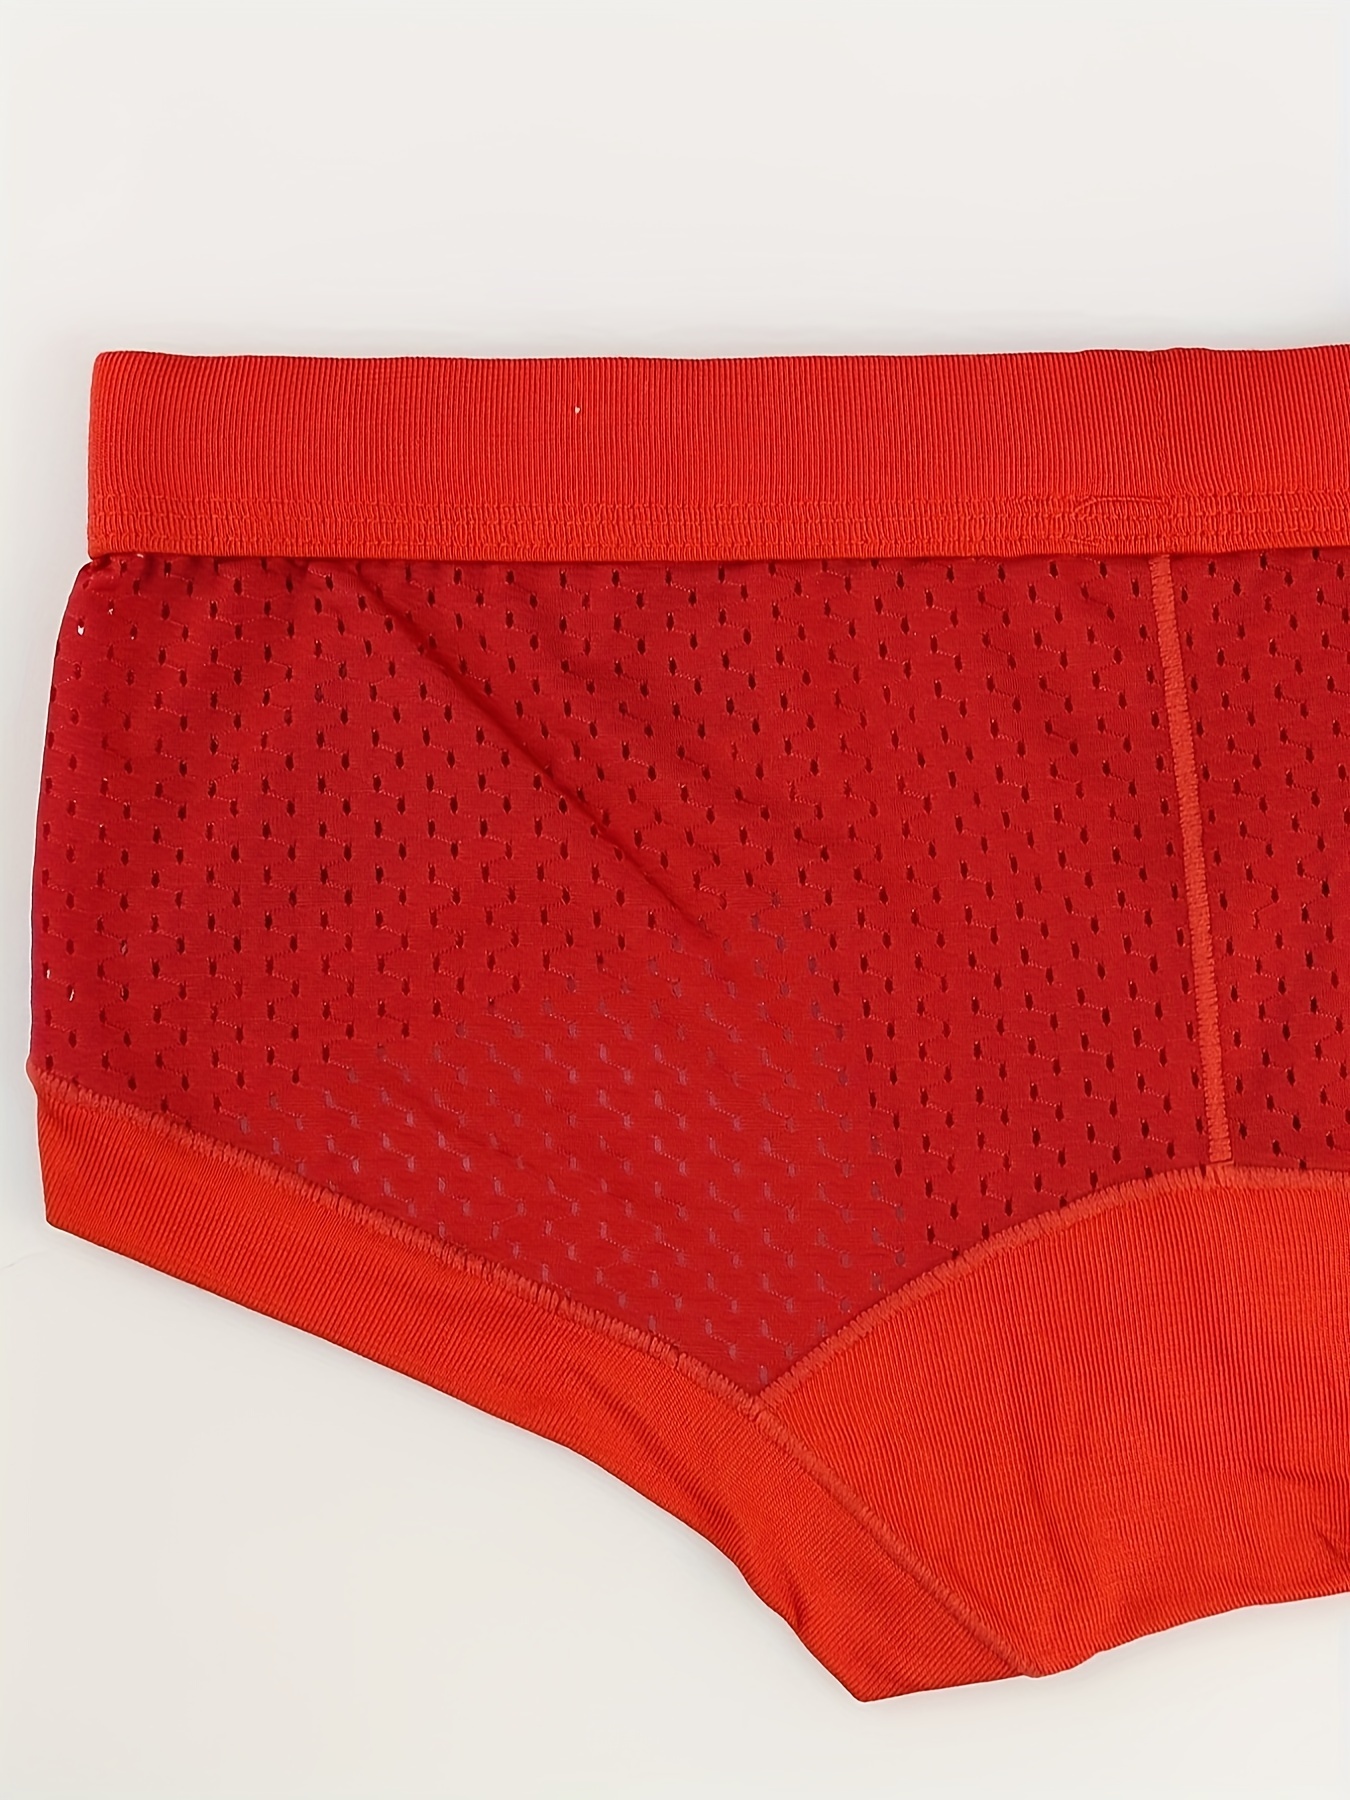 Adidas Men Underwear Boxer Briefs Shorts 1 PC Red Climacool Light